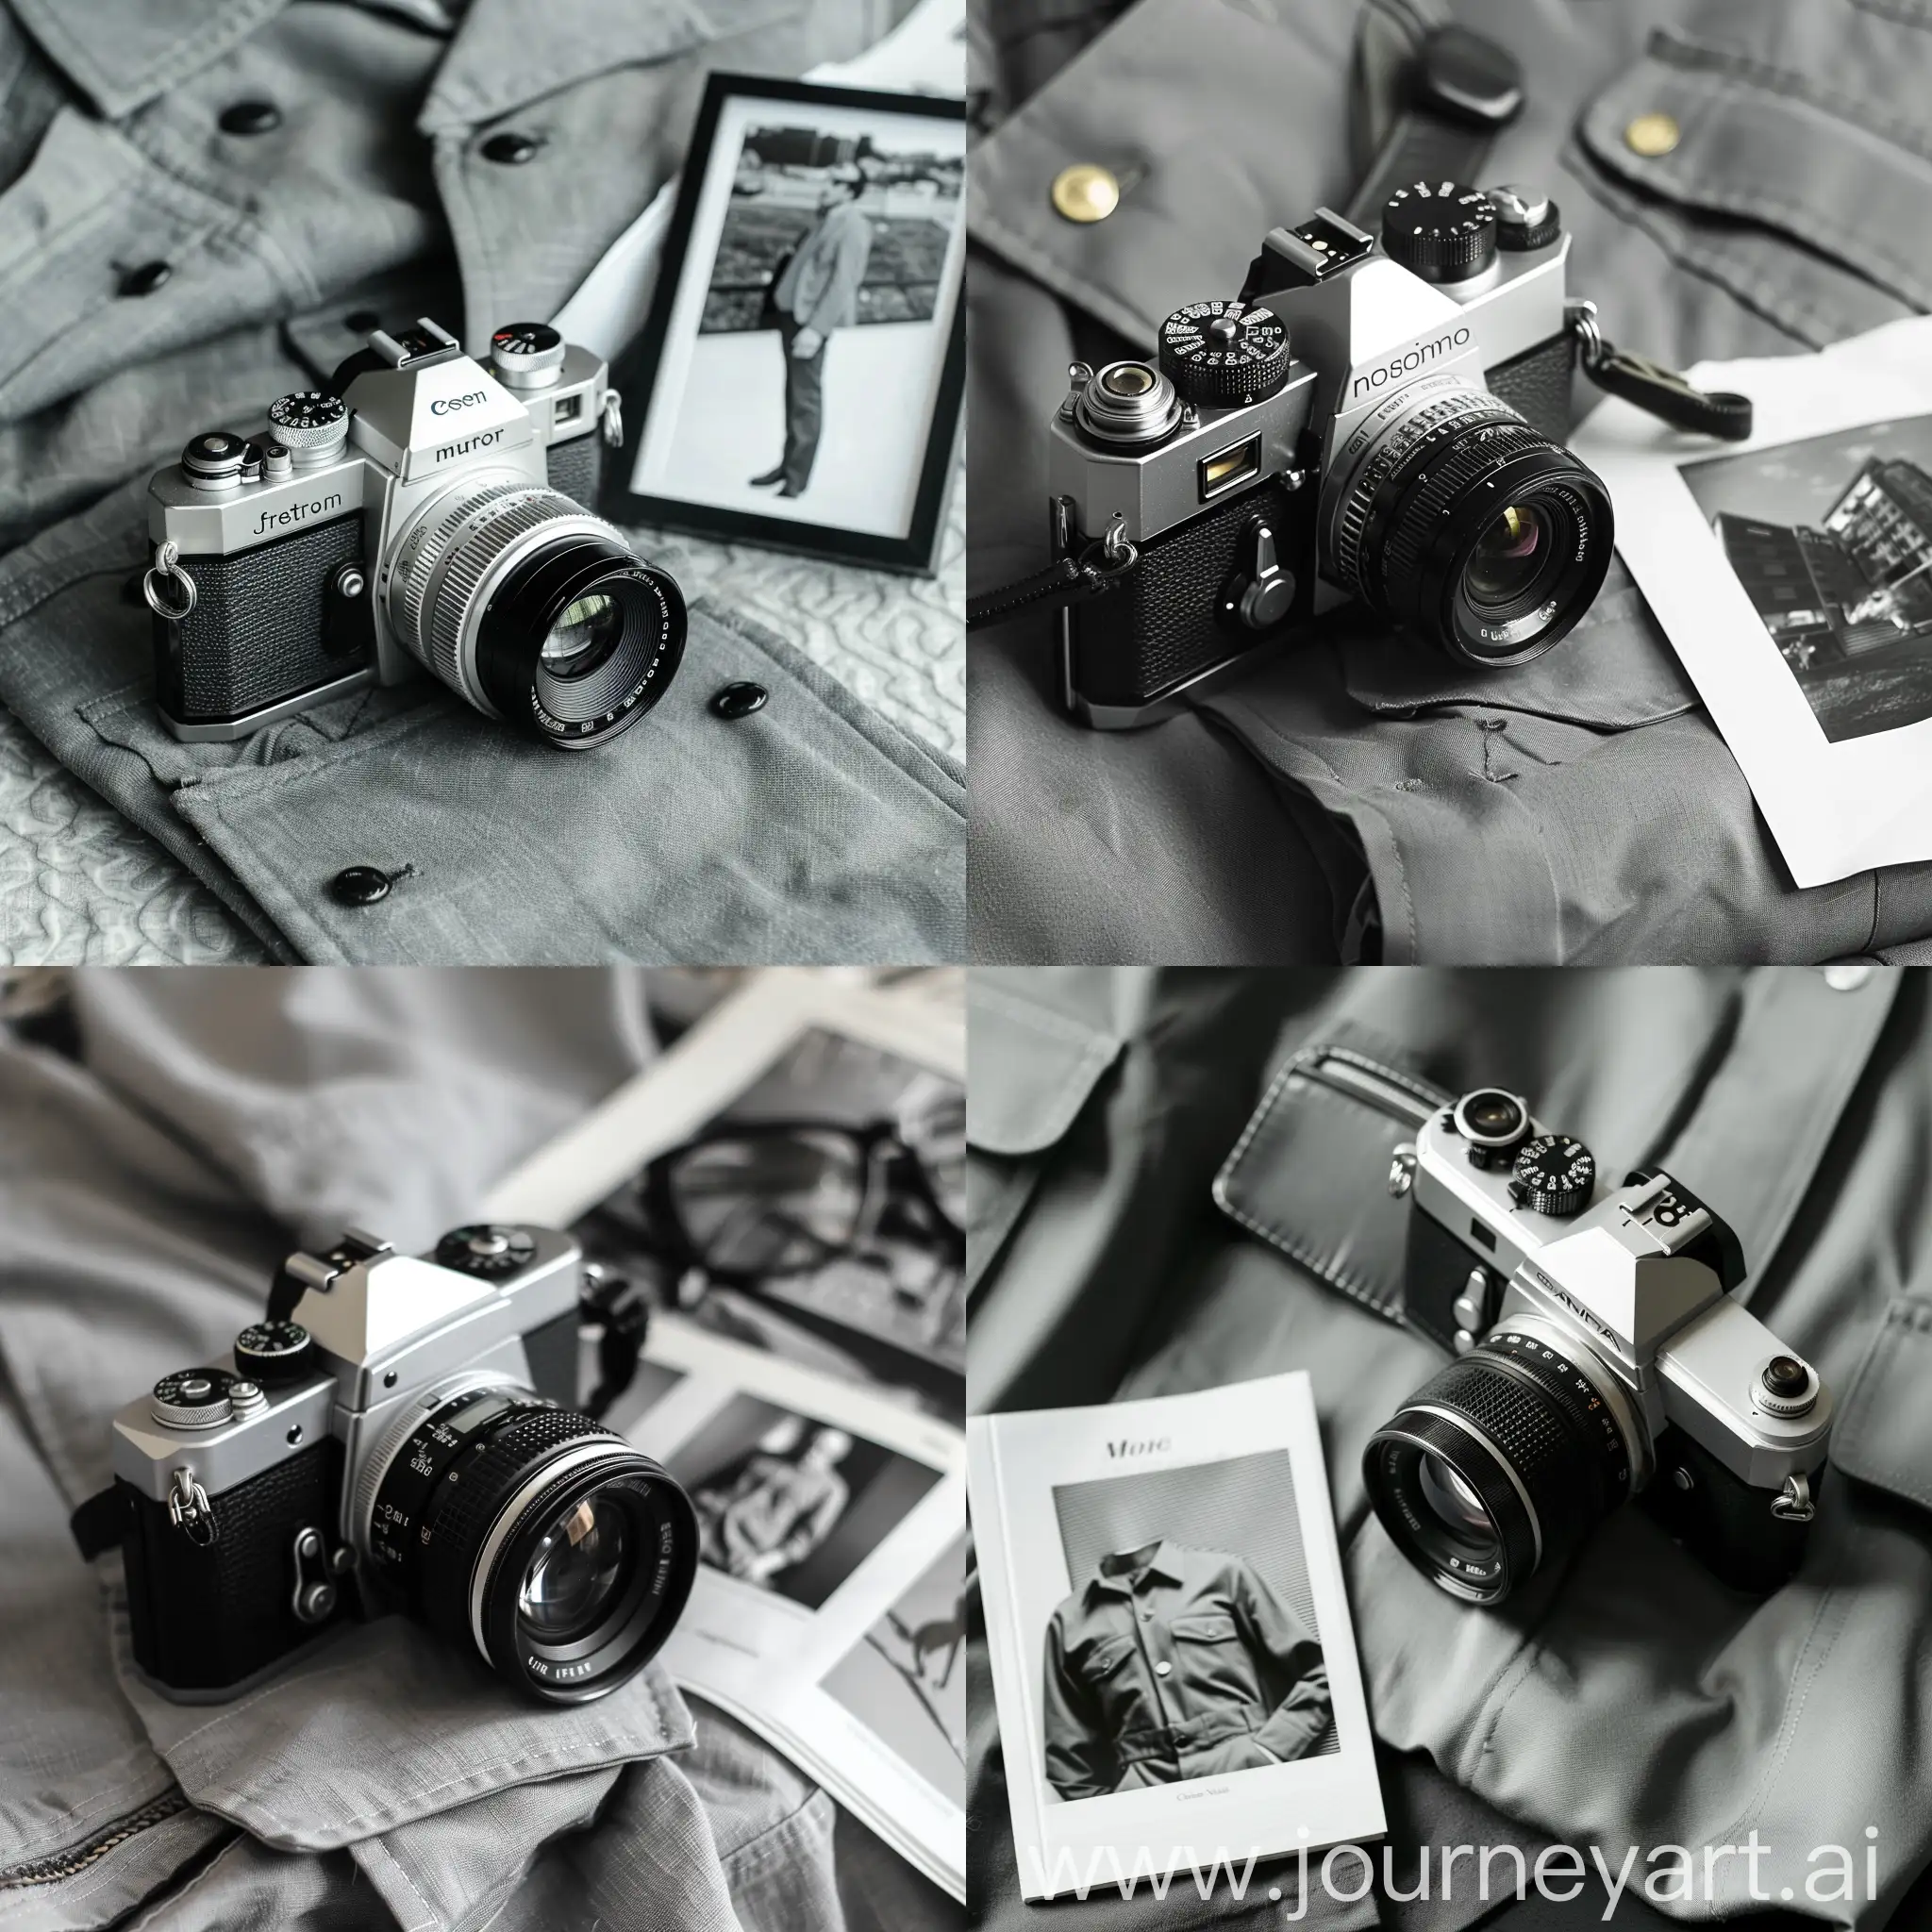 modern camera and photo, stylish black and white magazine photo, gray uniform background

